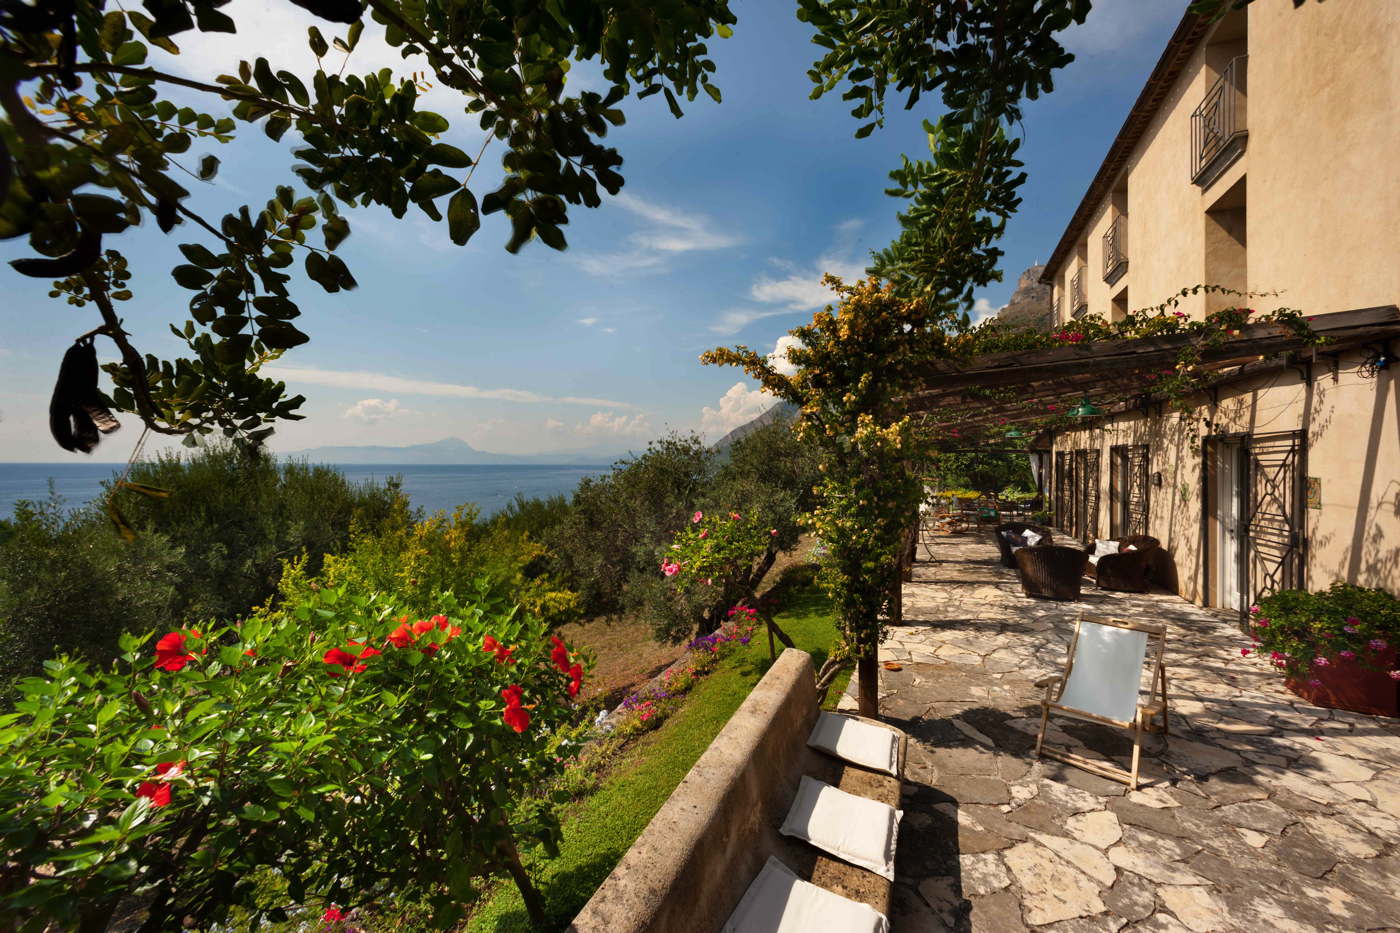 Holiday rental villa overlooking the ocean in Basilicata Italy